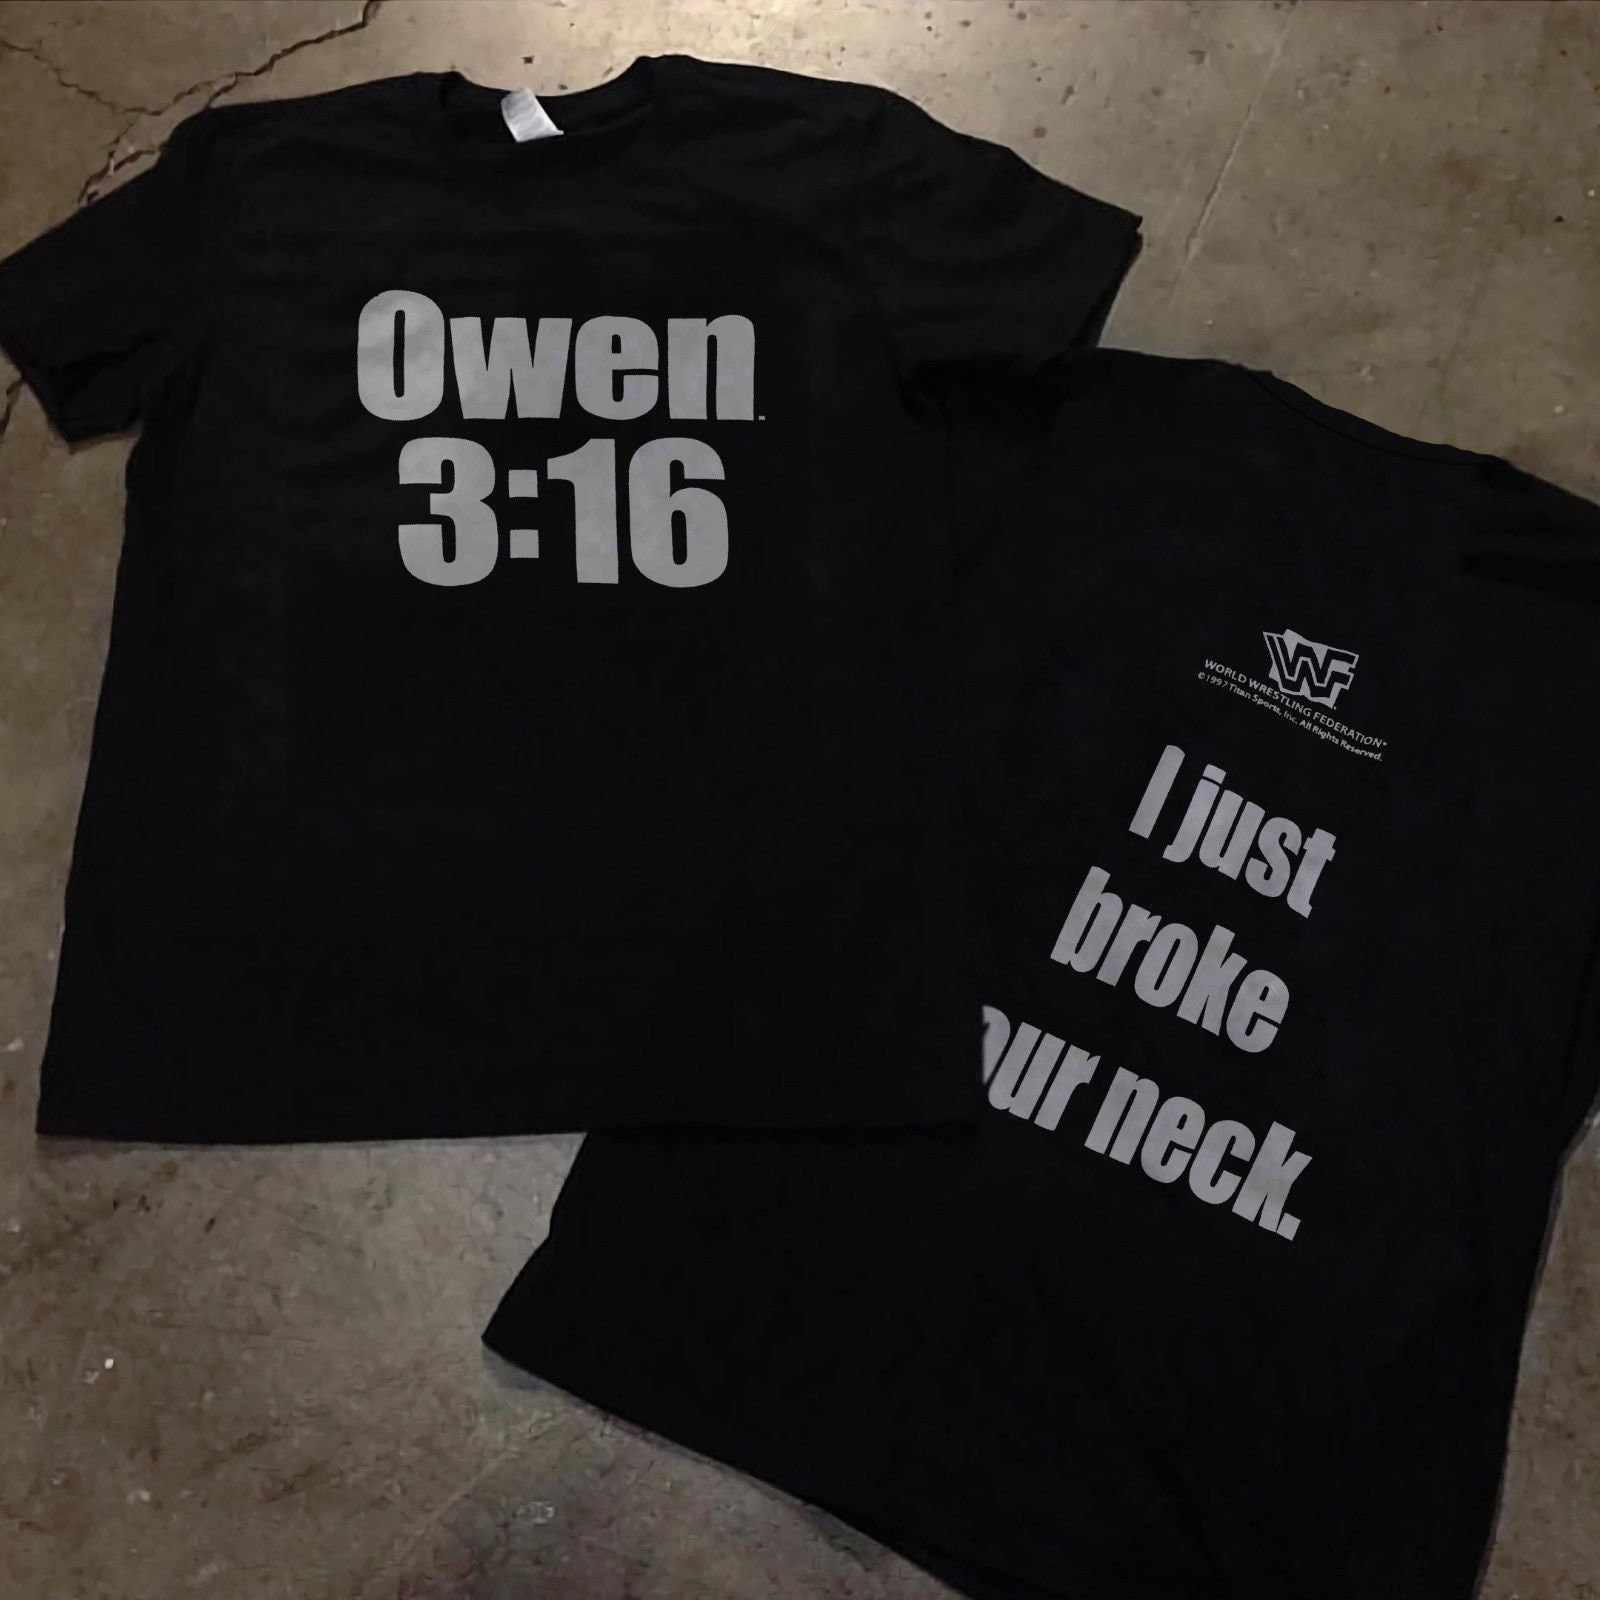 nul Productiecentrum galerij 3-16 Owen Hart 1997 VTG Black T Shirt - Etsy